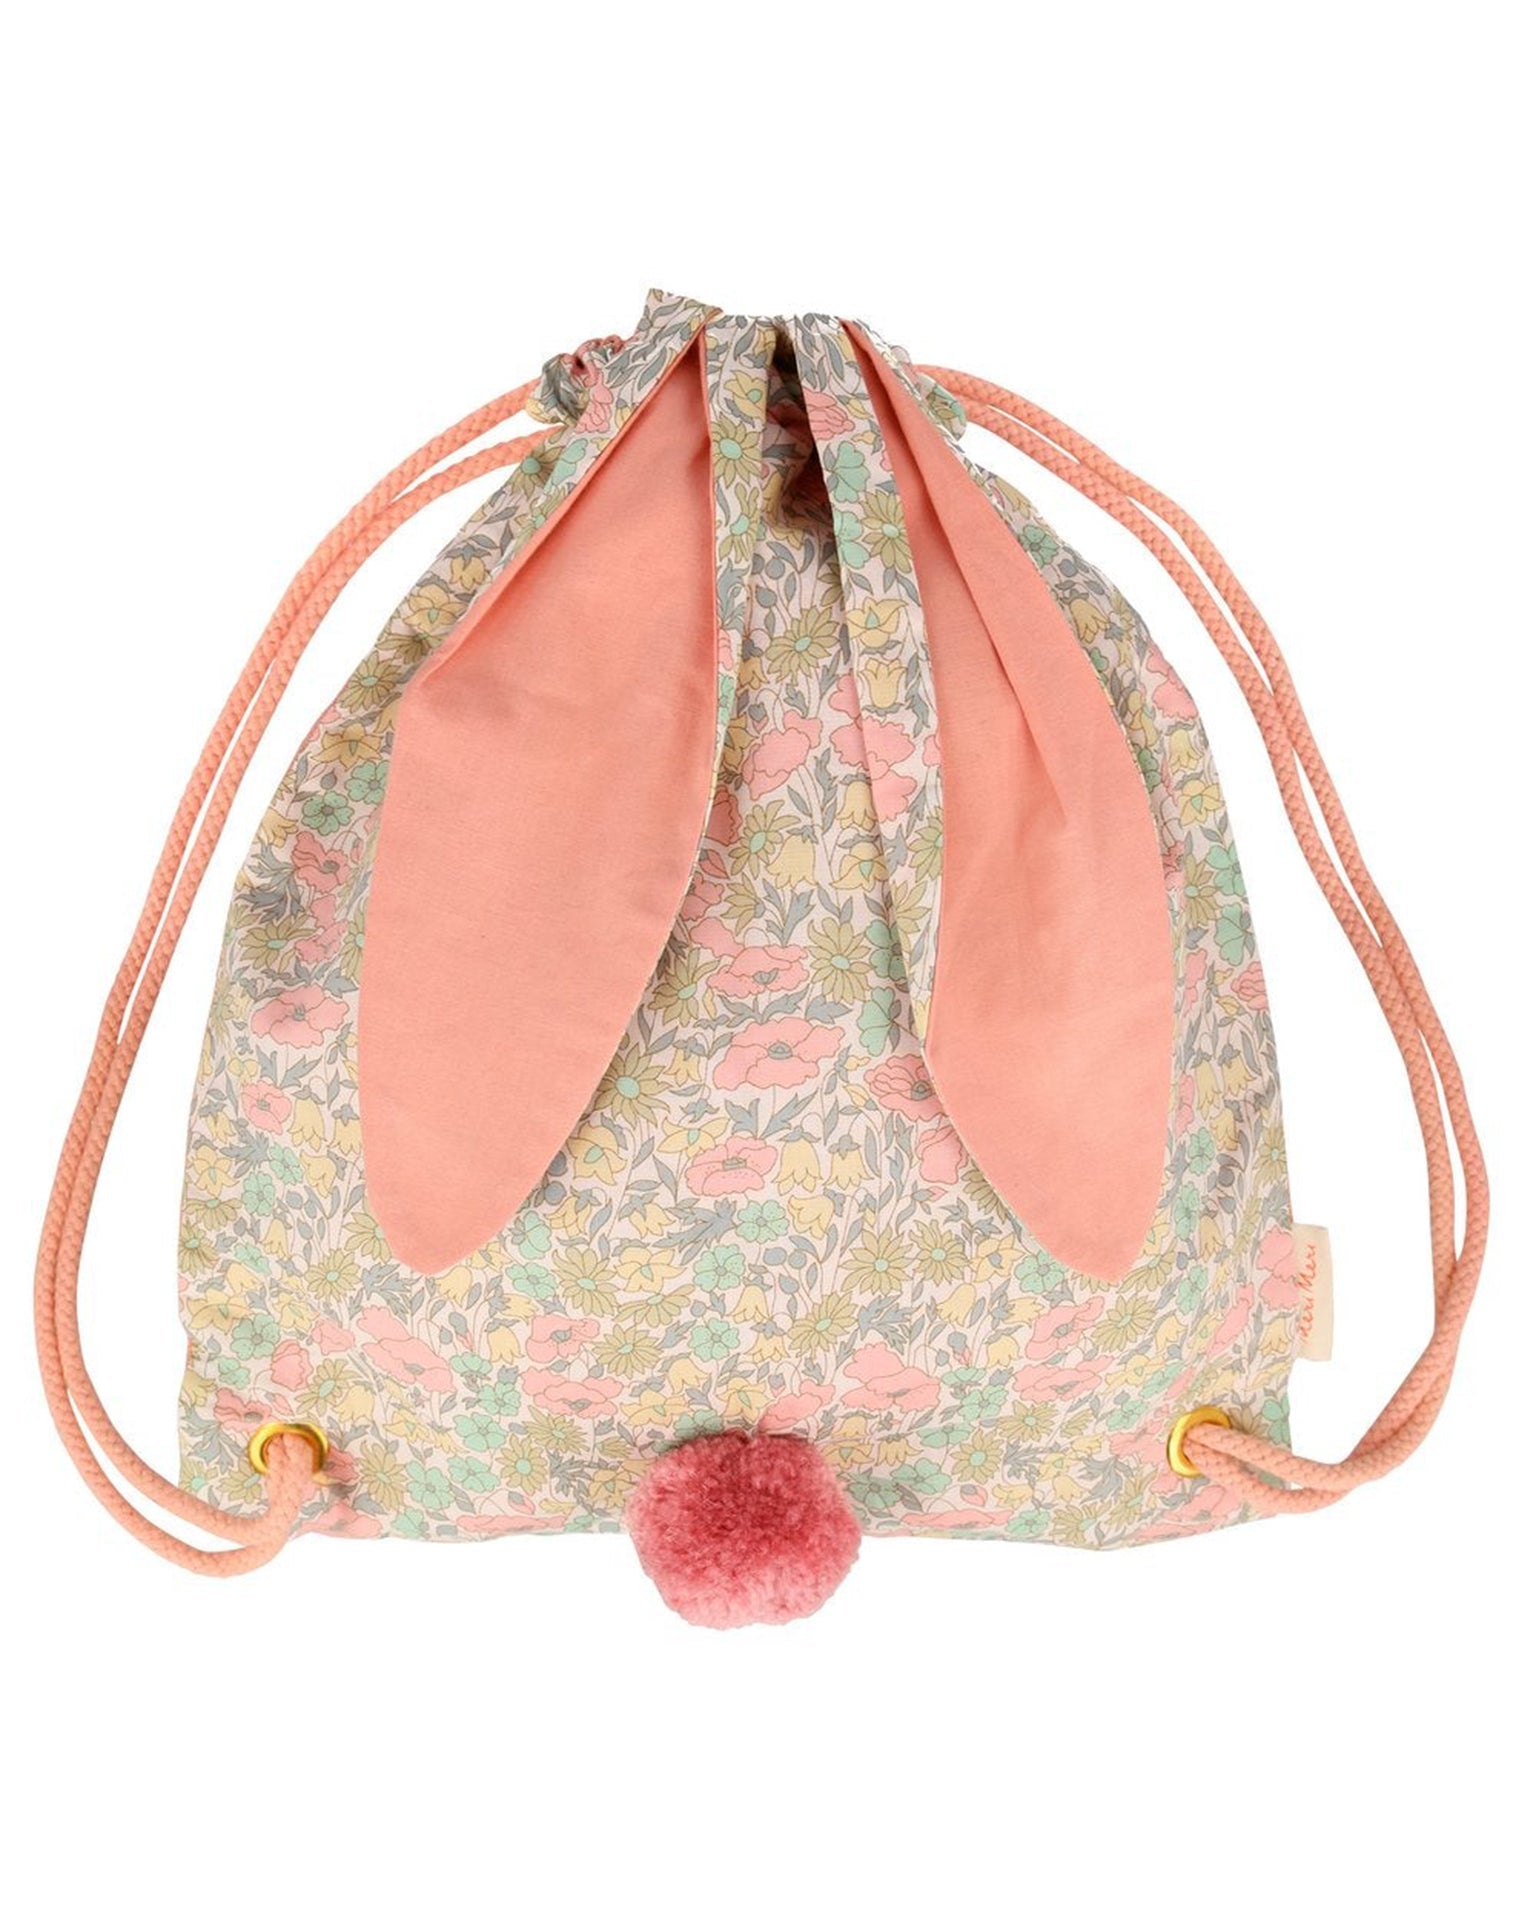 Little meri meri accessories floral bunny backpack